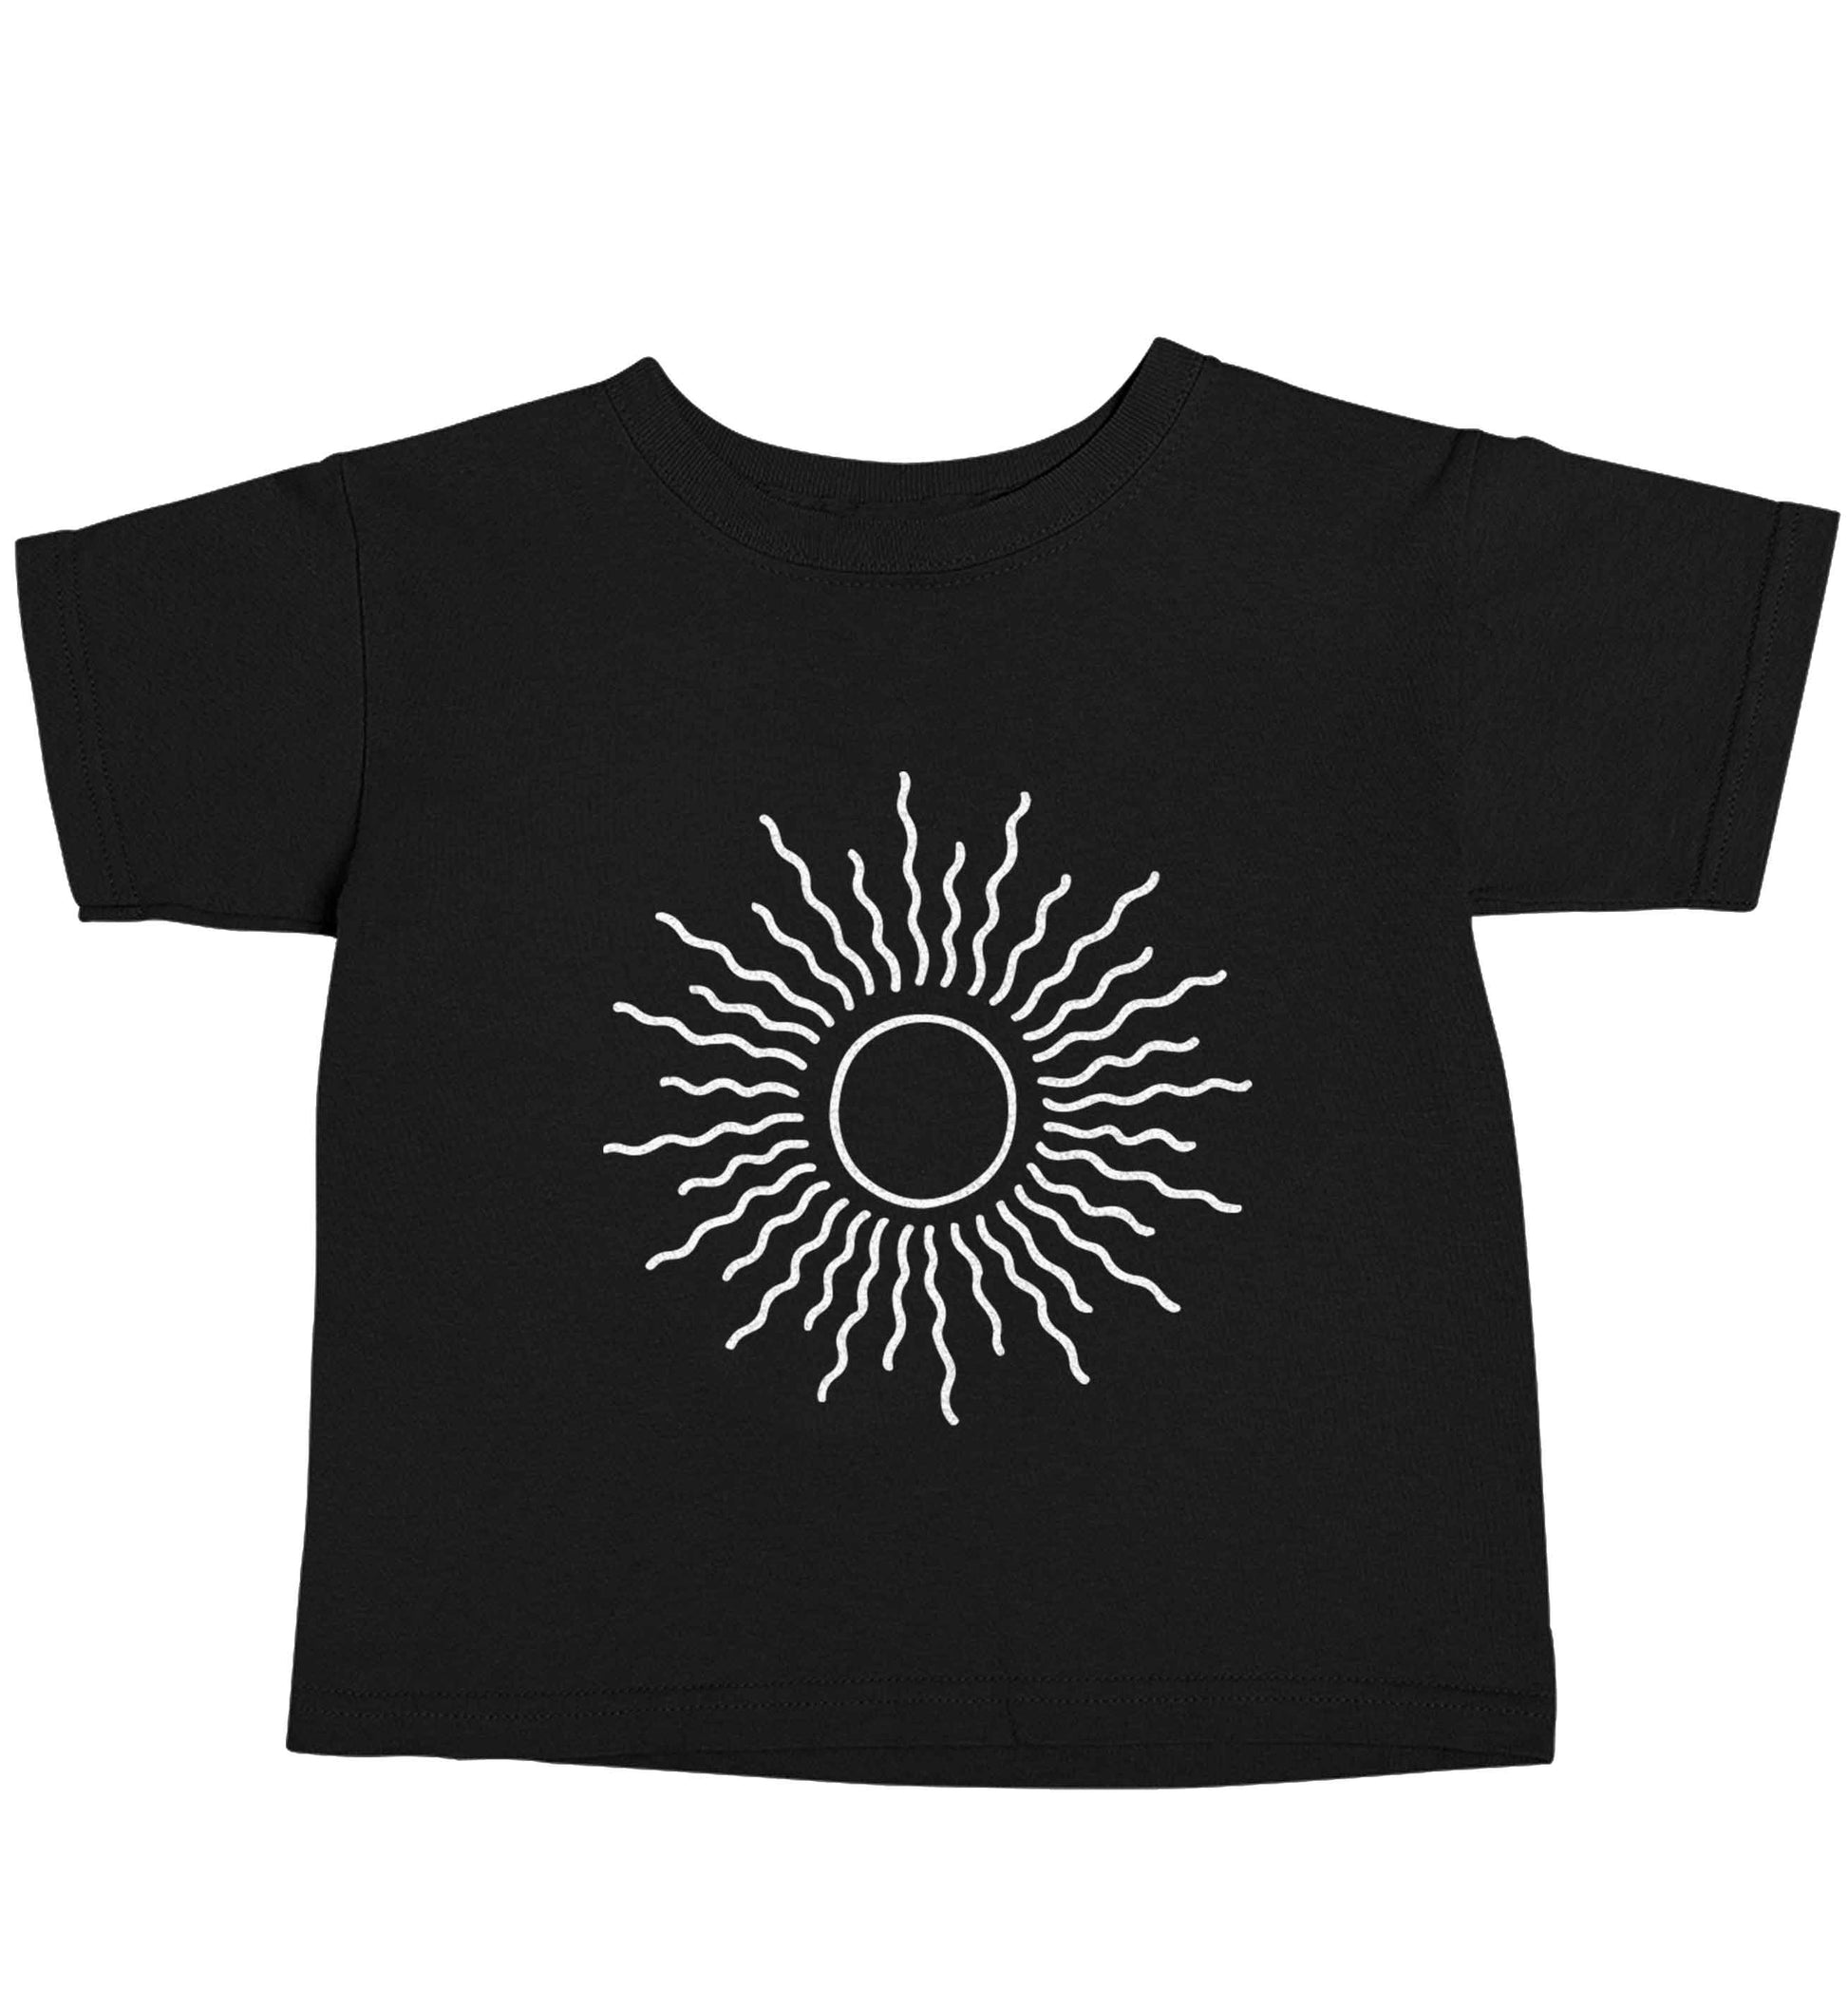 Sun illustration Black baby toddler Tshirt 2 years